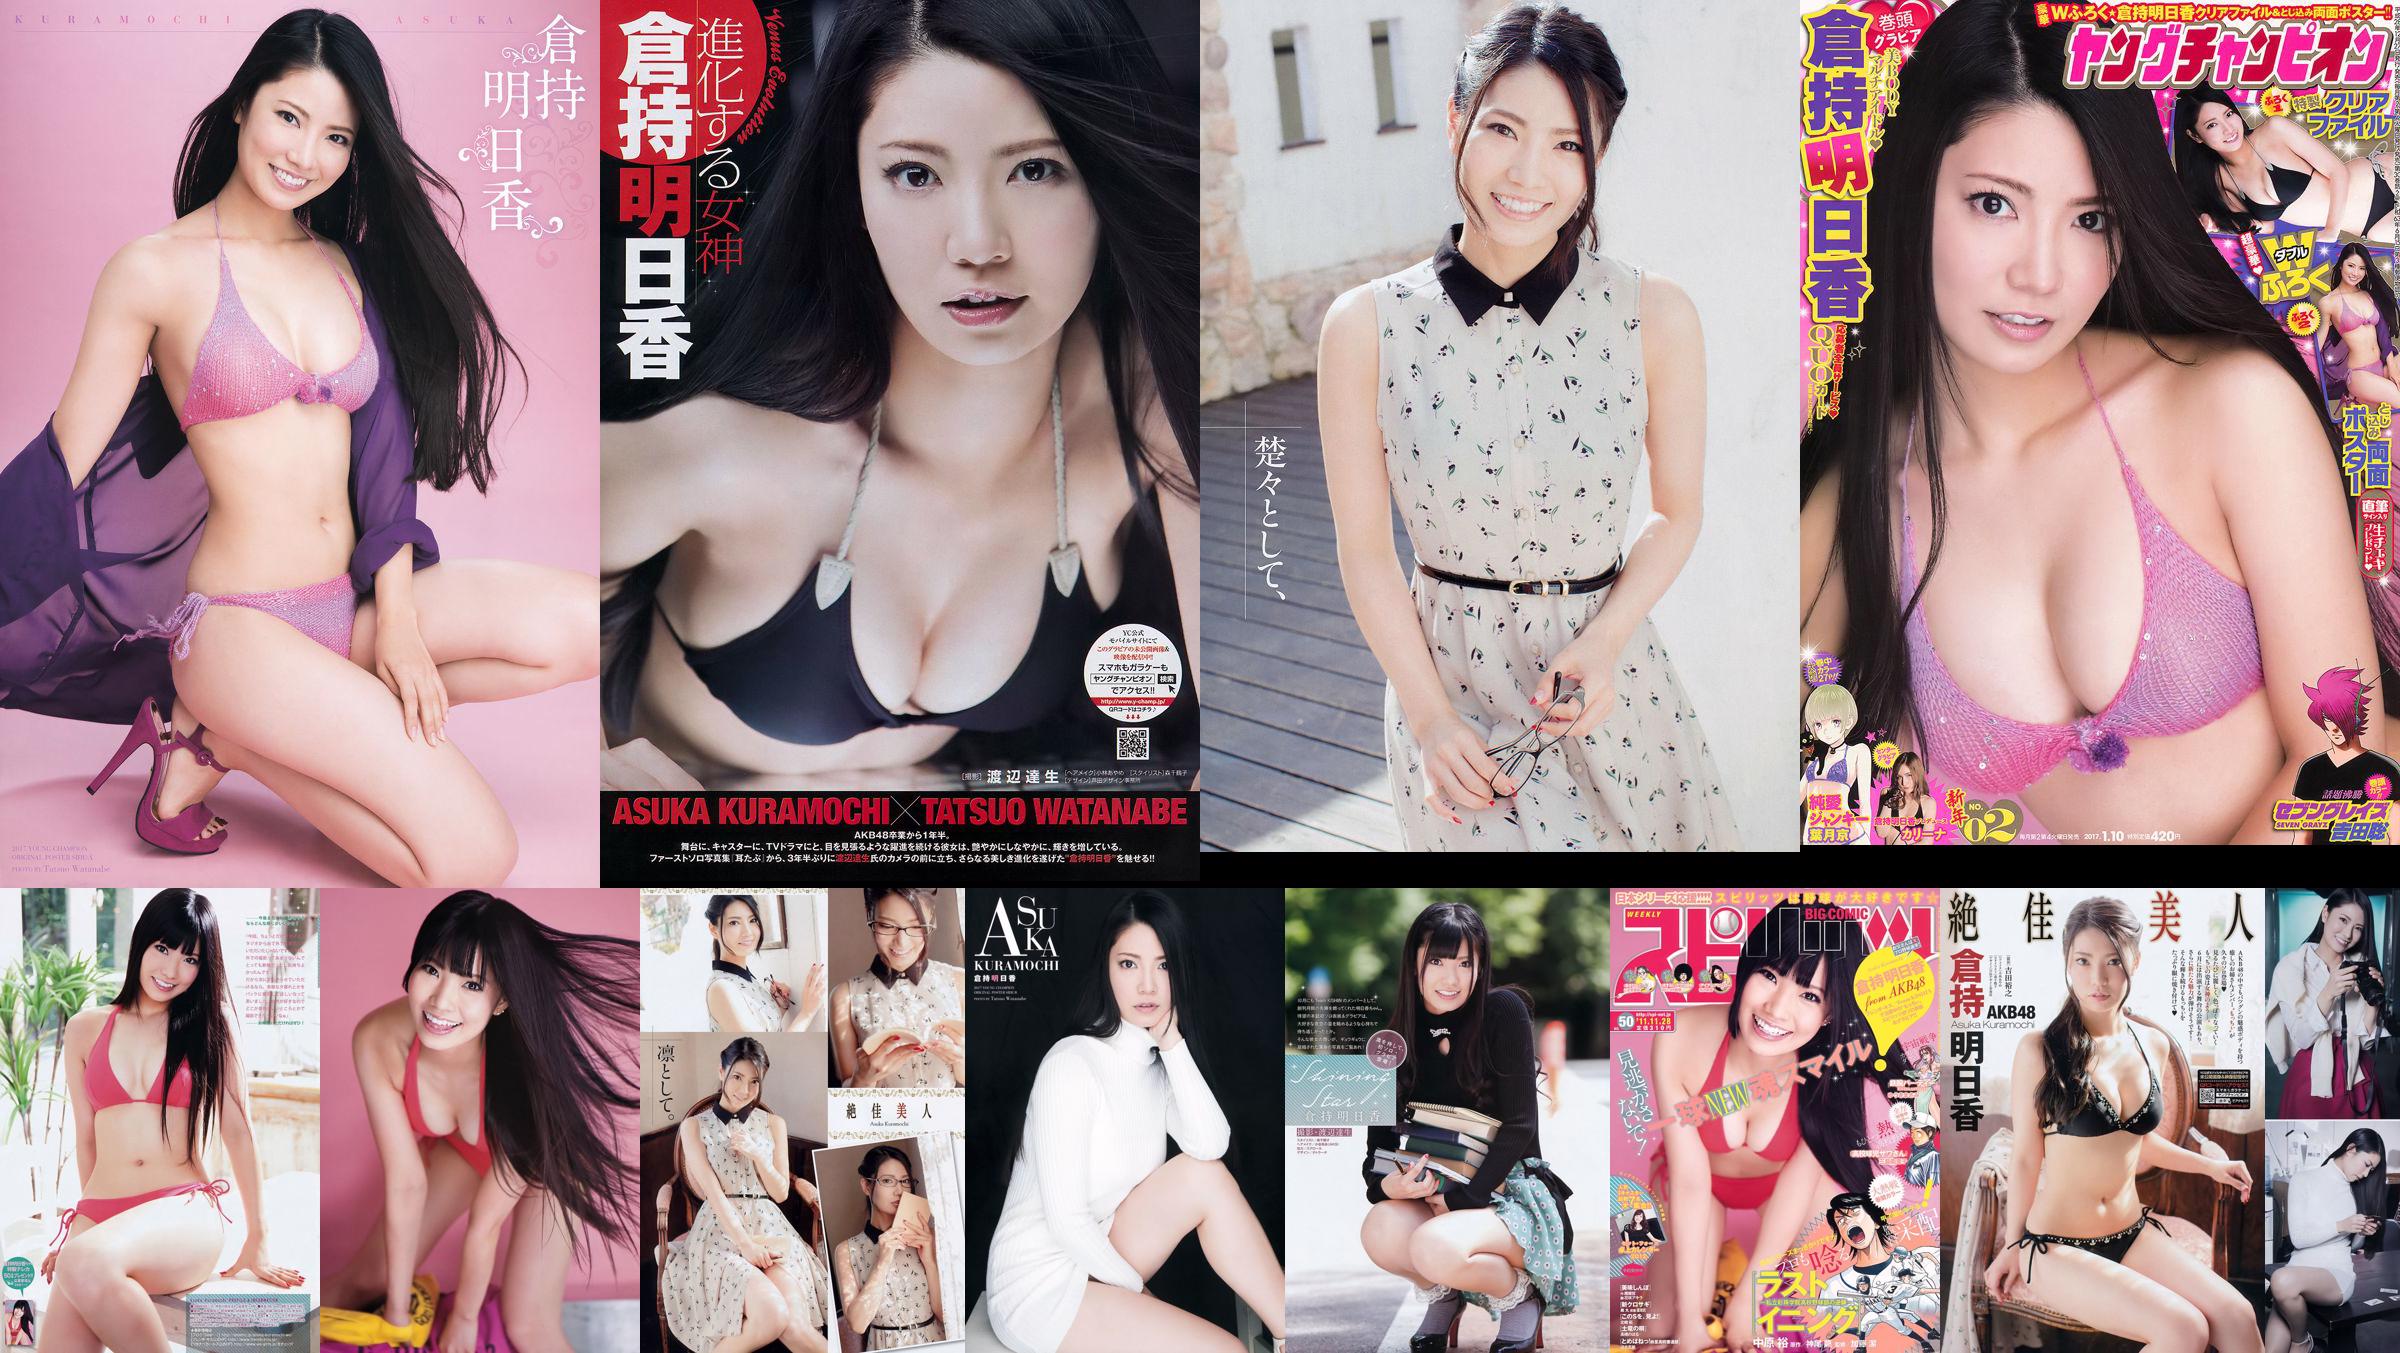 [Joven Campeona] Asuka Kuramochi 2015 No 09 Revista fotográfica No.db63ca Página 1